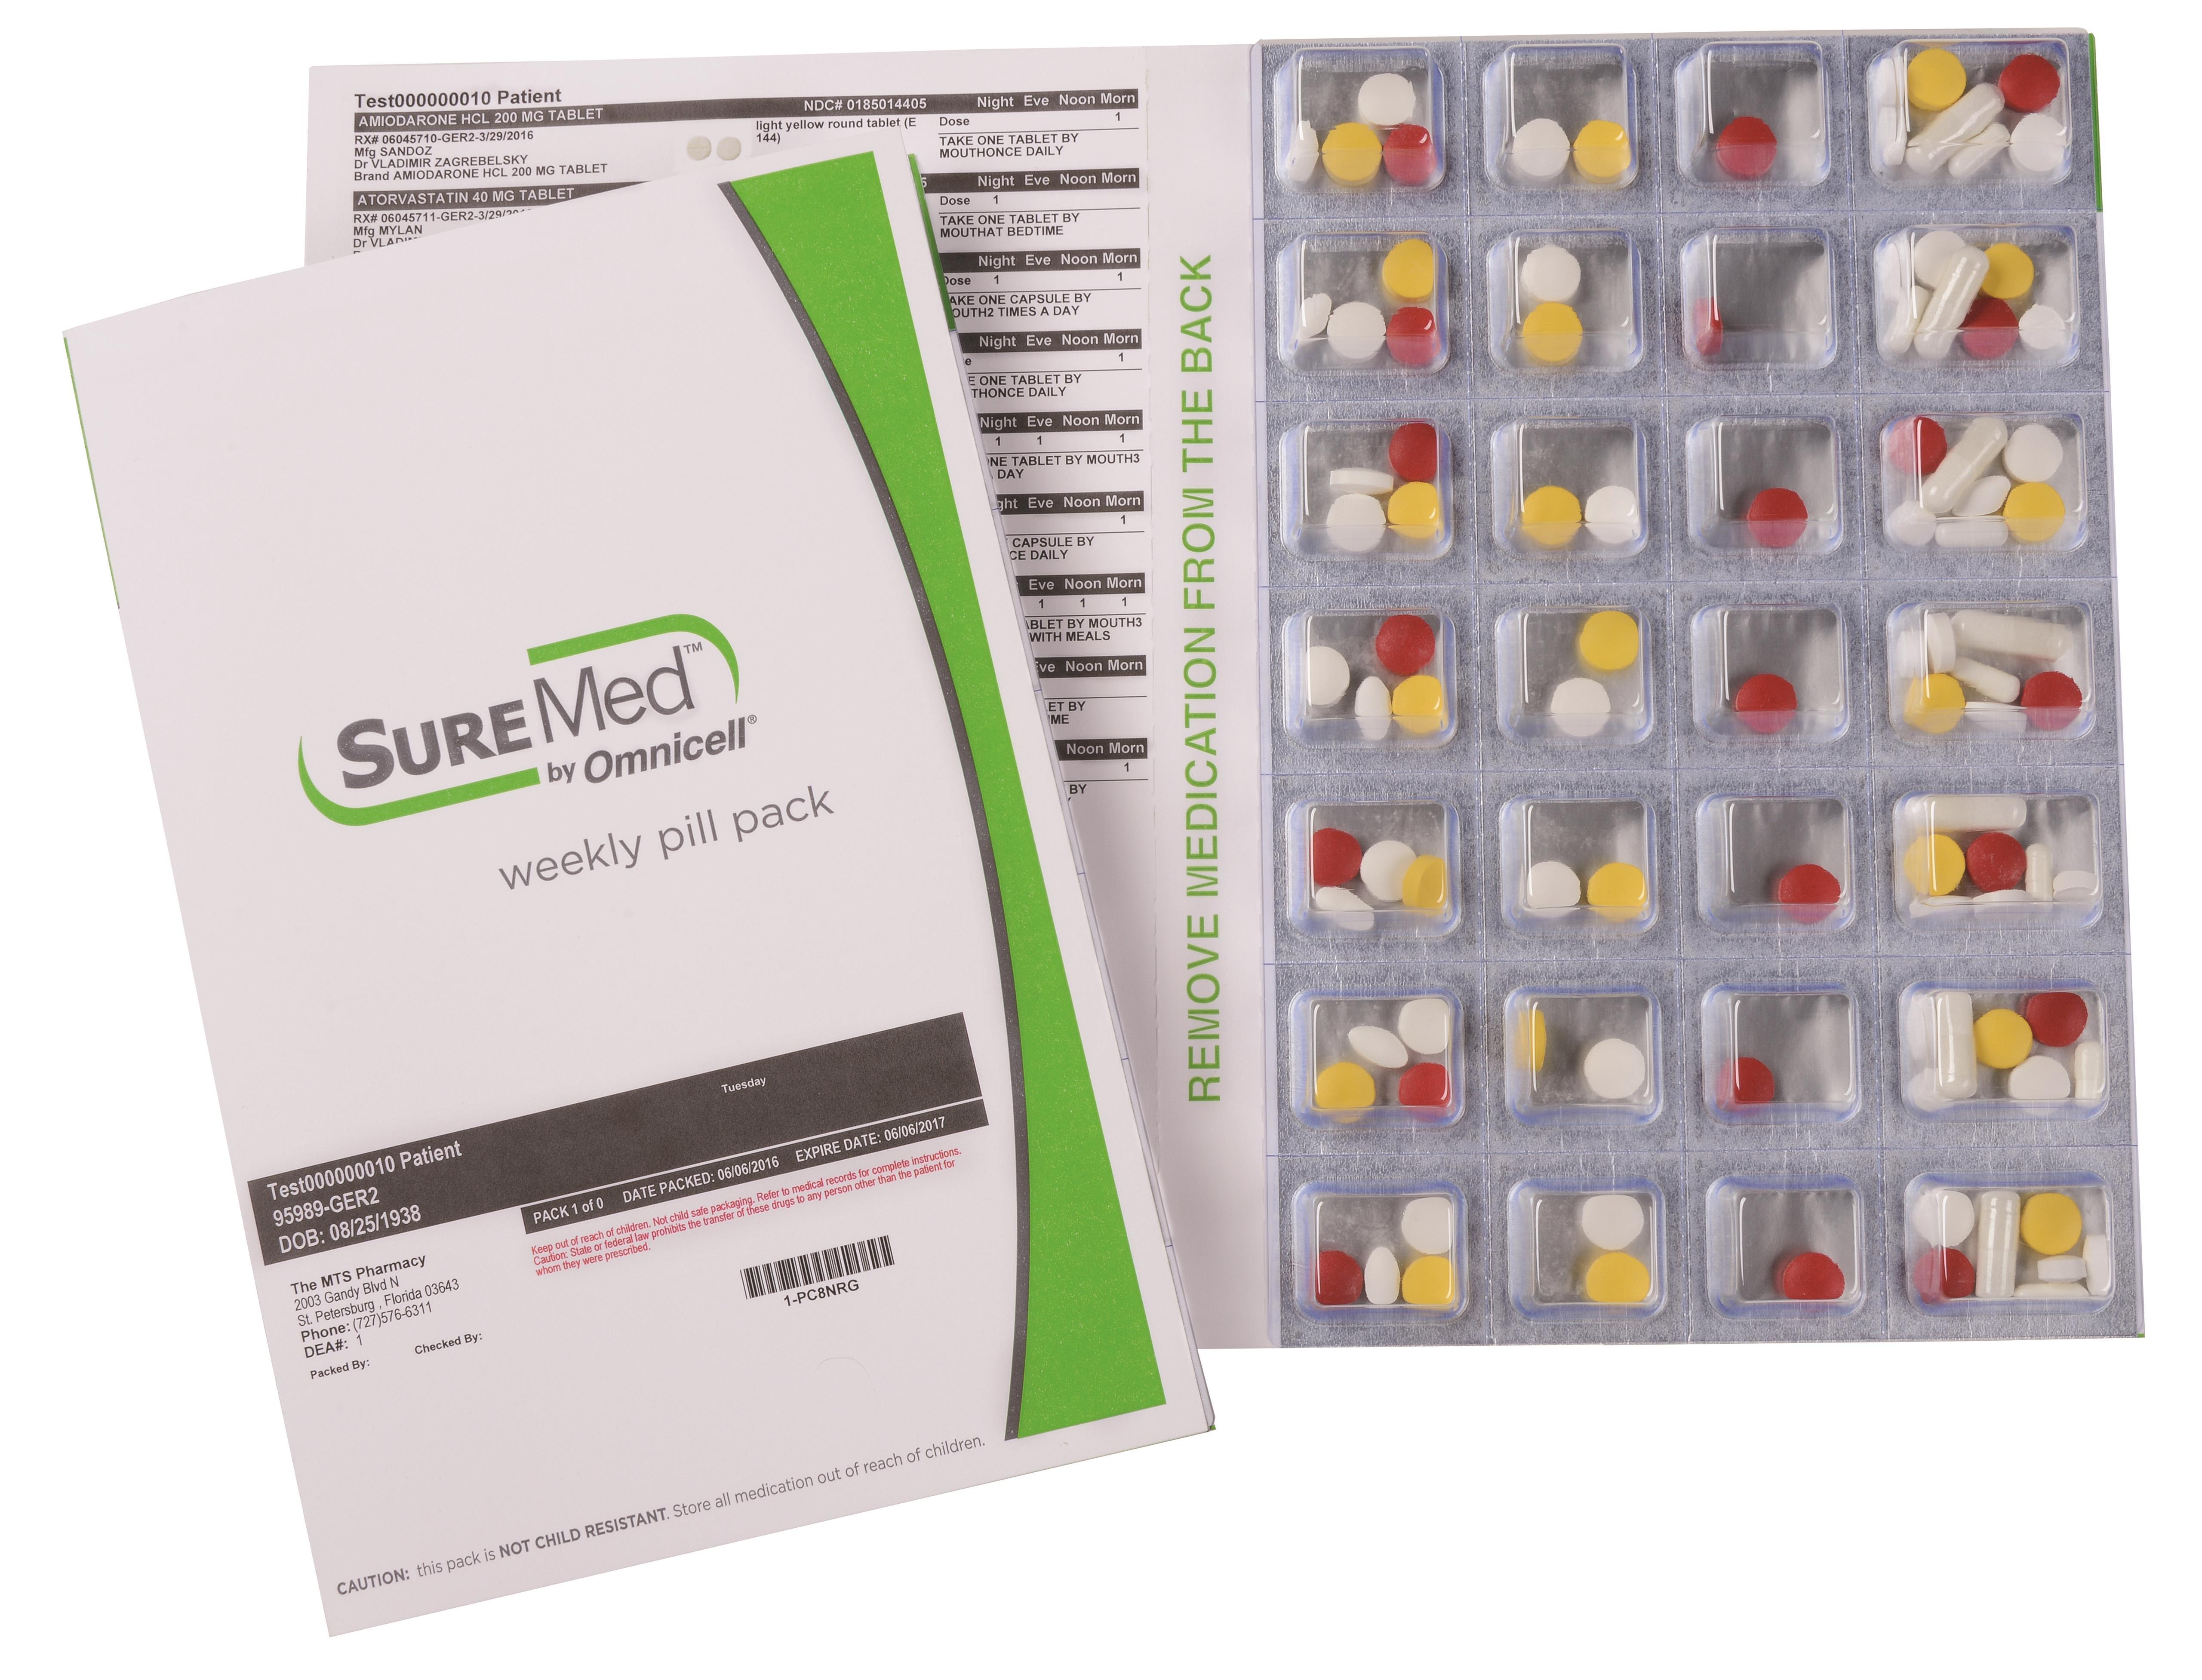 SureMed Adherence Program